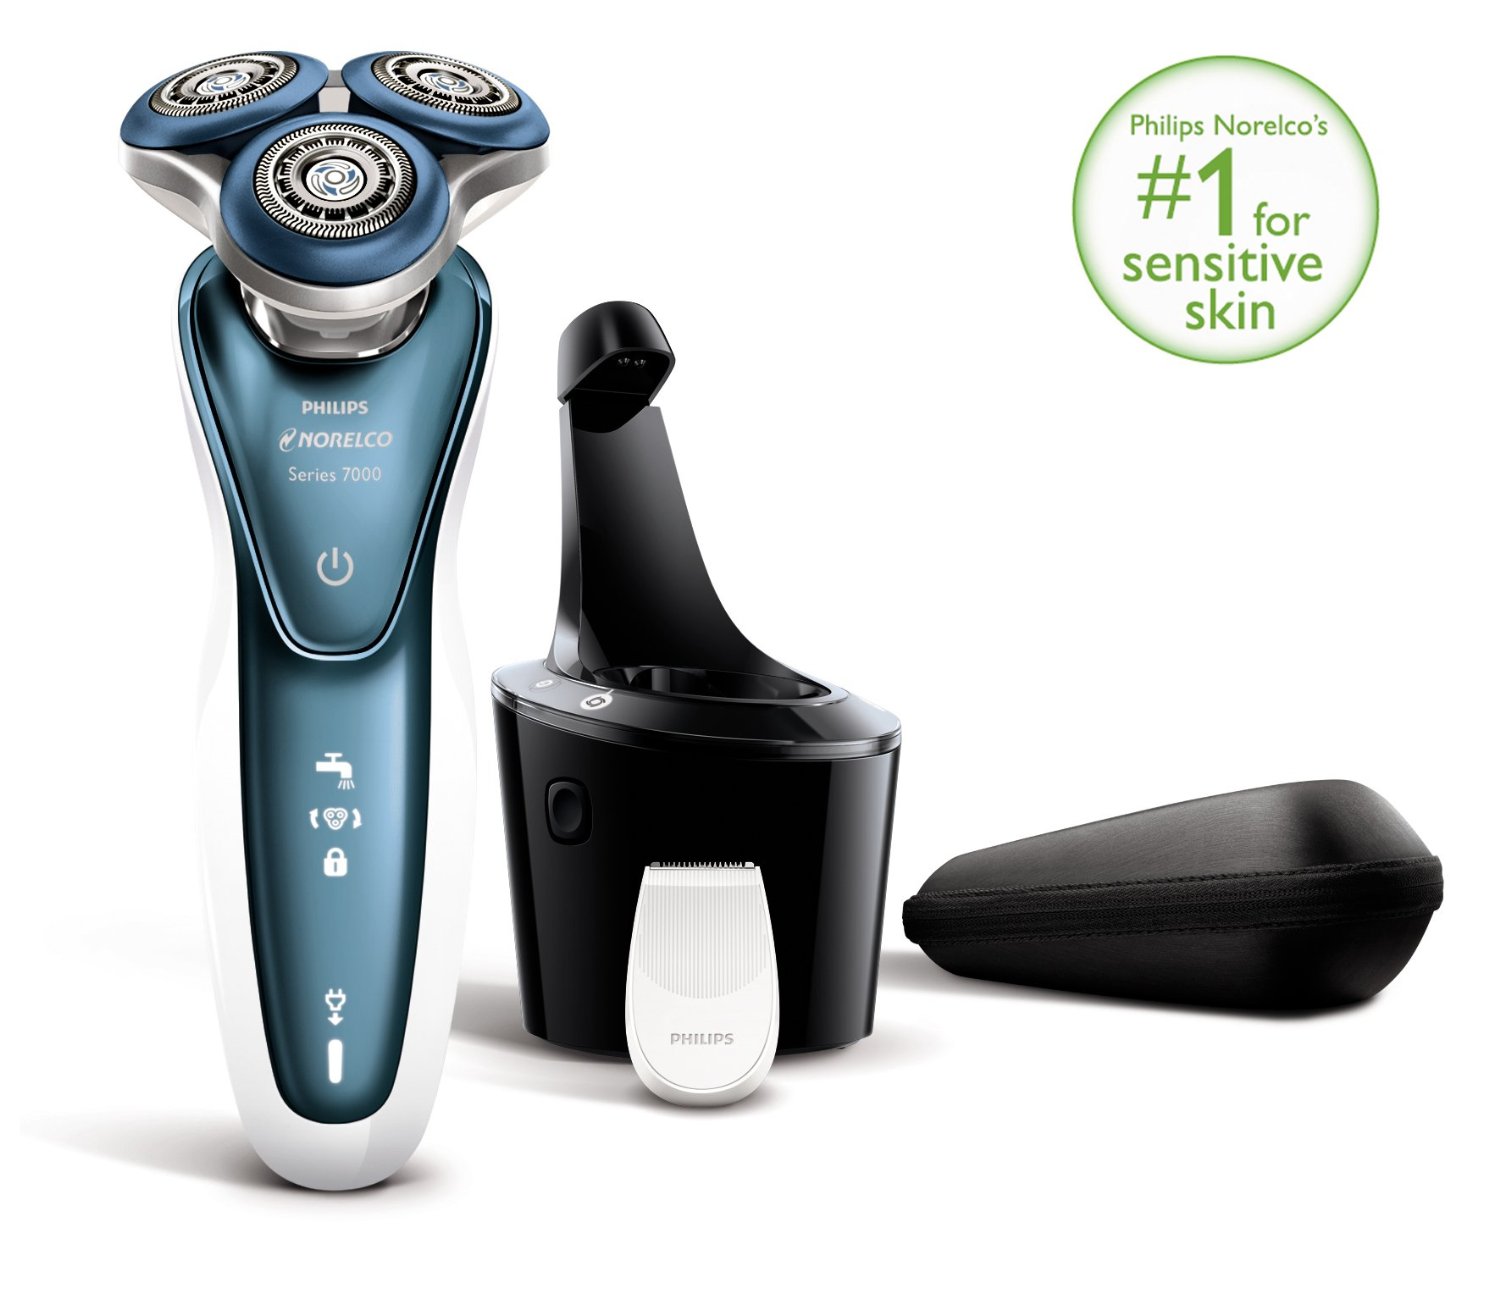 philips-norelco-shaver-7300-for-sensitive-skin-review-2-best-men-s-shaver